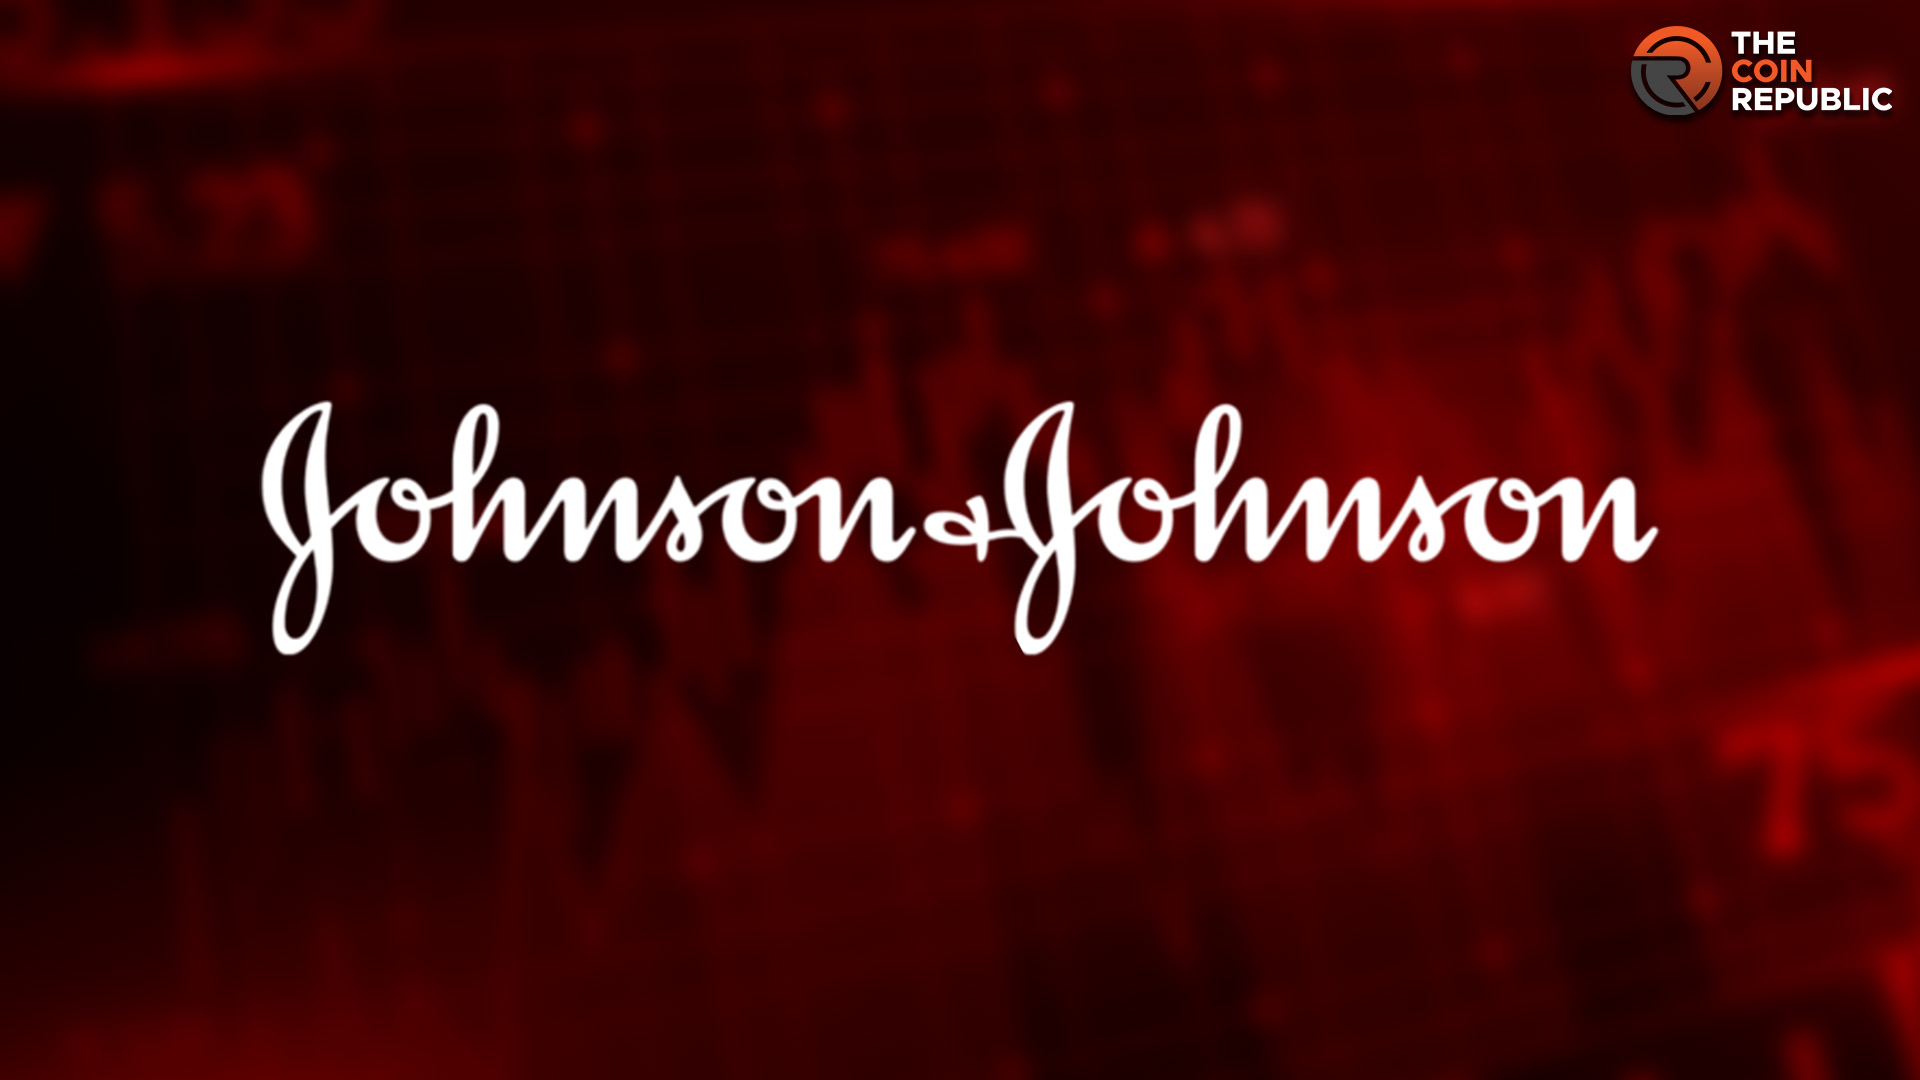 JNJ Stock: Johnson & Johnson Bullish or Bearish Outlook for 2023?